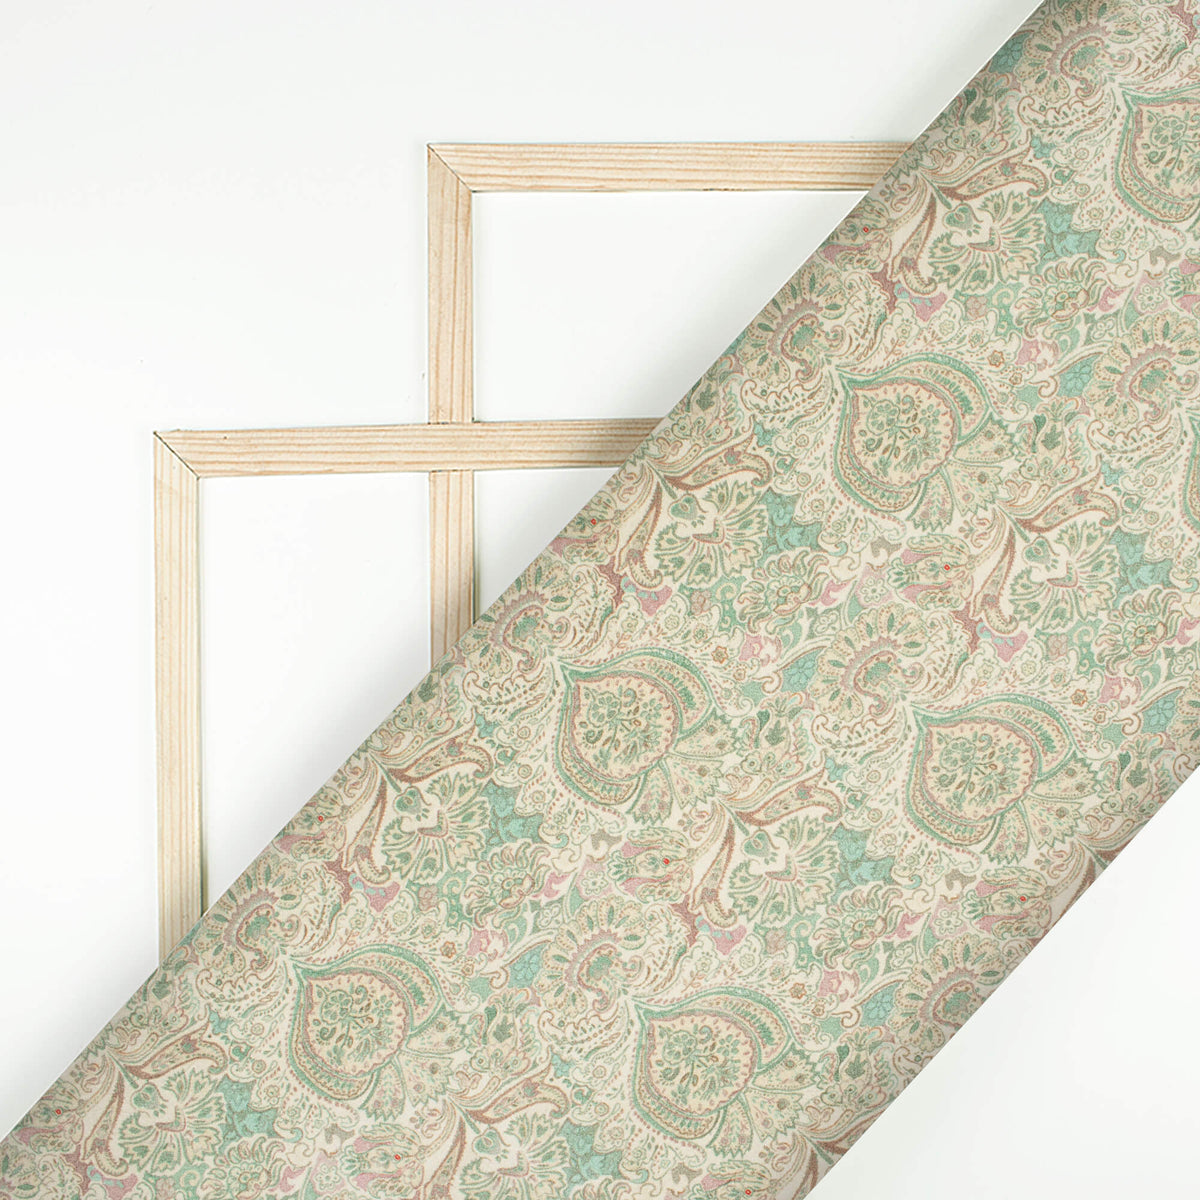 Seafoam Green And Cream Ethnic Pattern Digital Print Viscose Gaji Silk Fabric